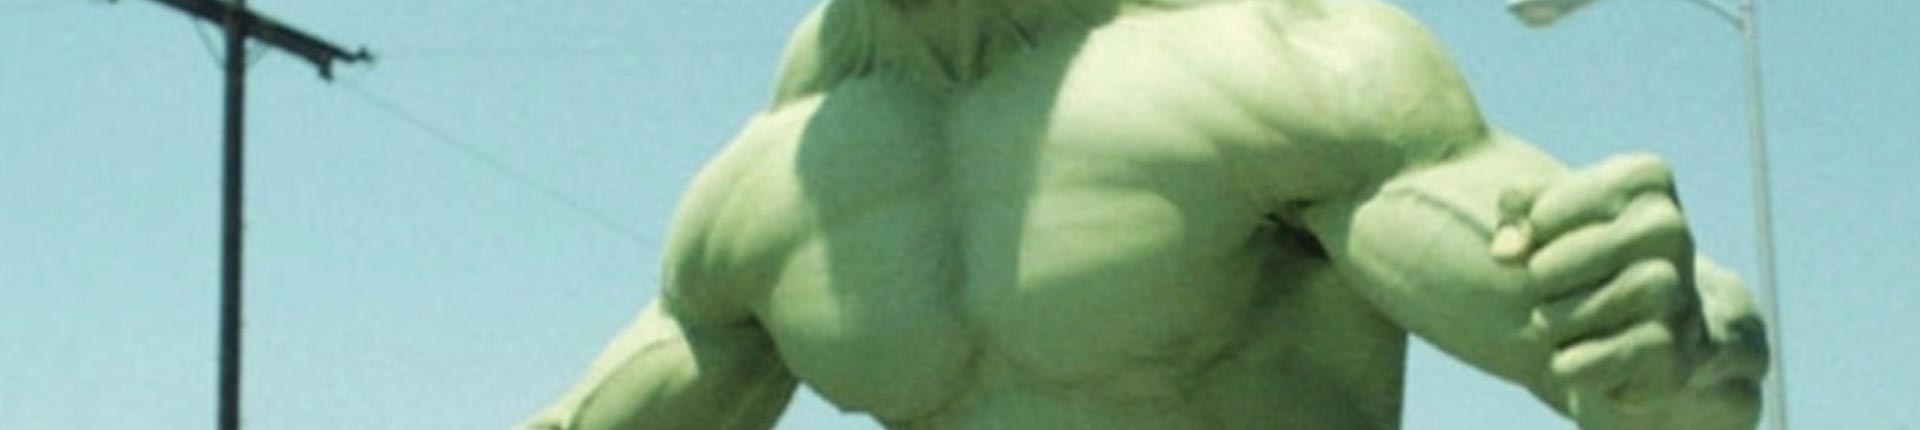 Jak trenował legendarny Hulk - Lou Ferrigno